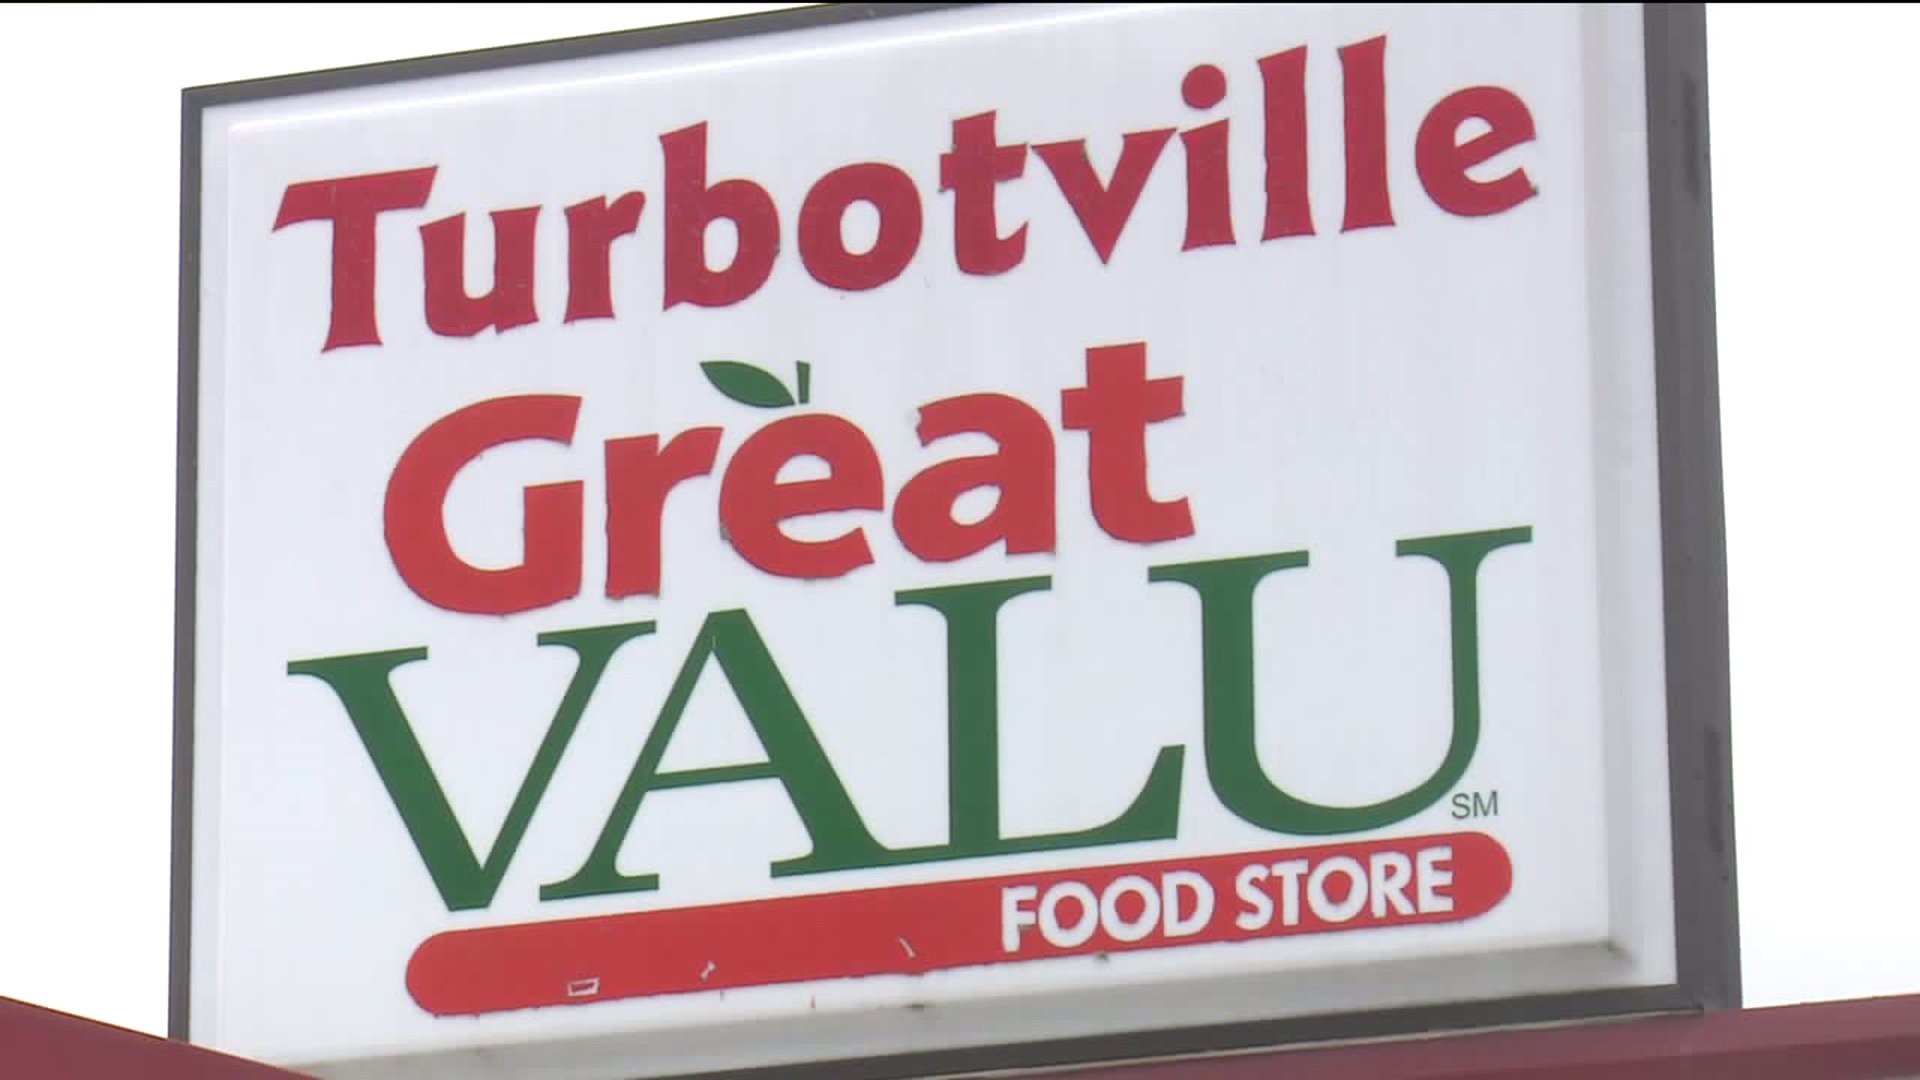 Turbotville Great Valu Open for Business